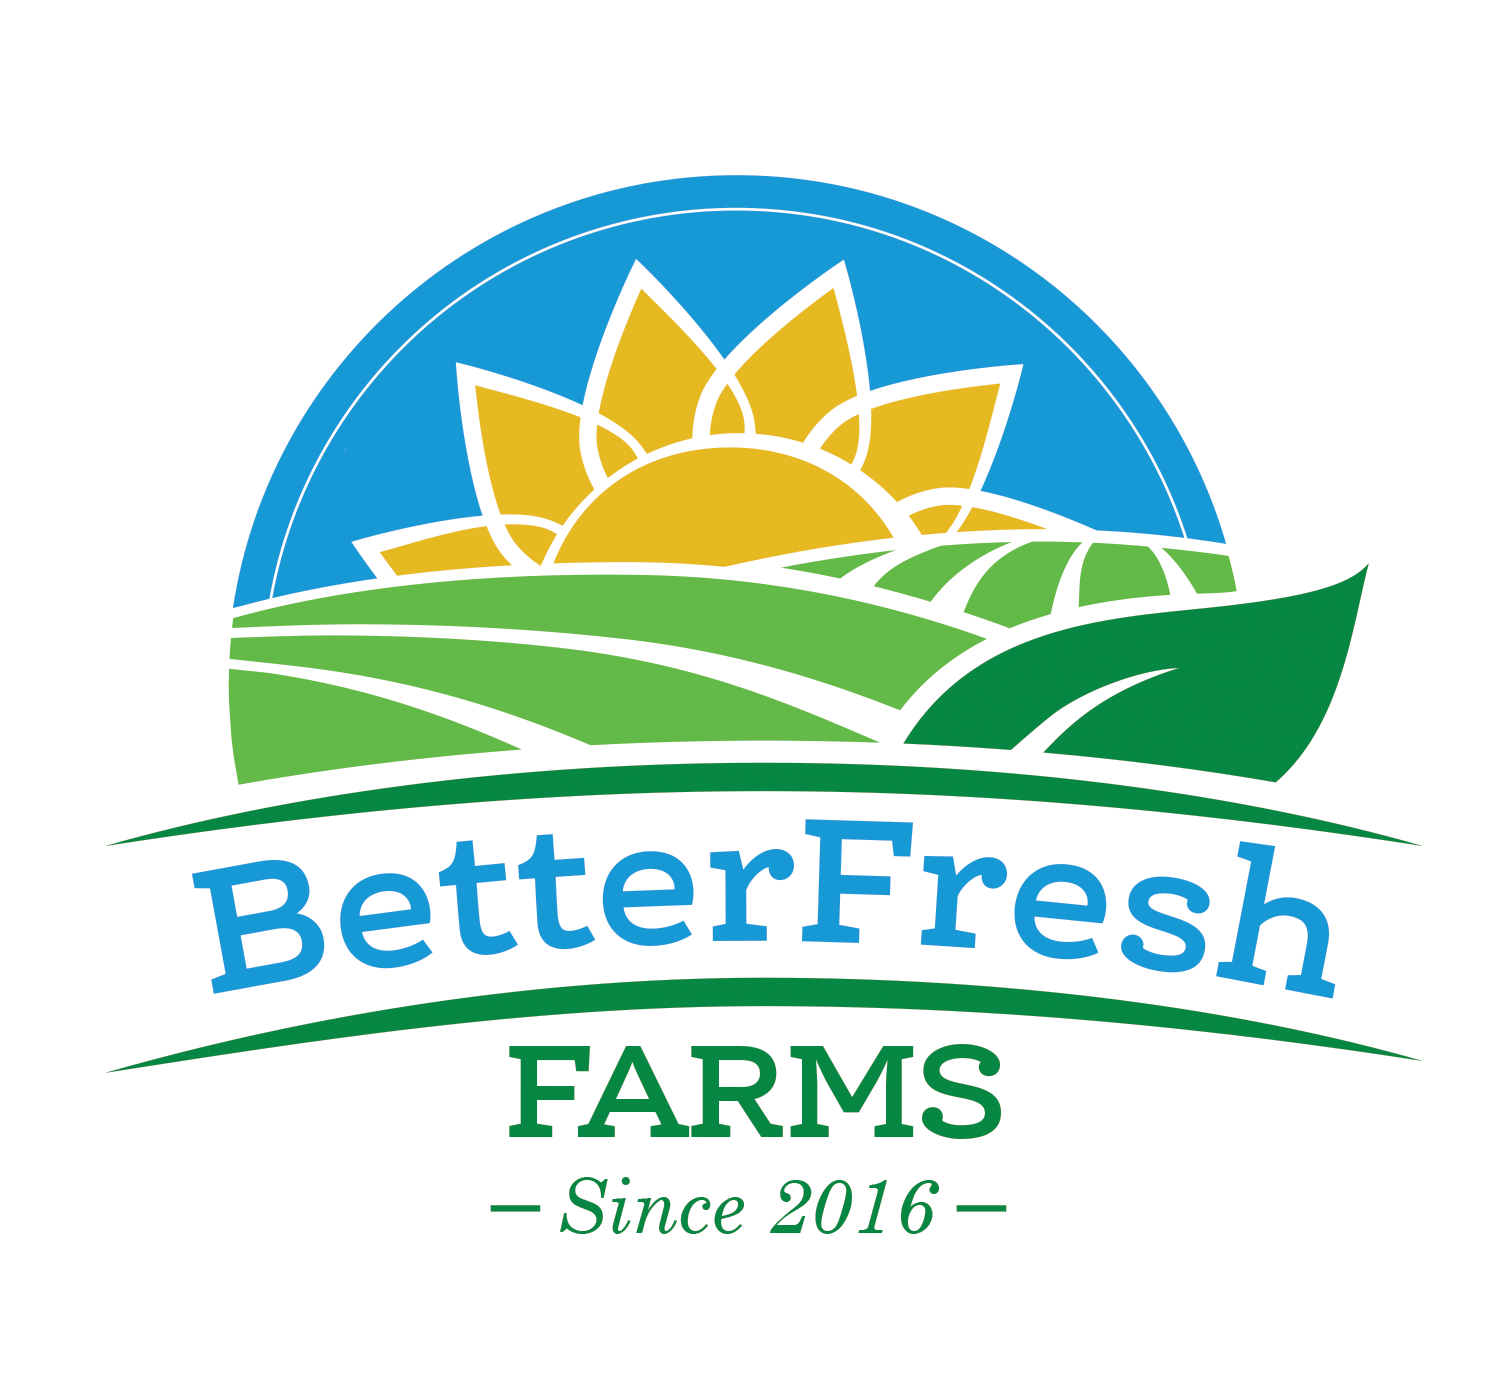 Better Fresh Farms